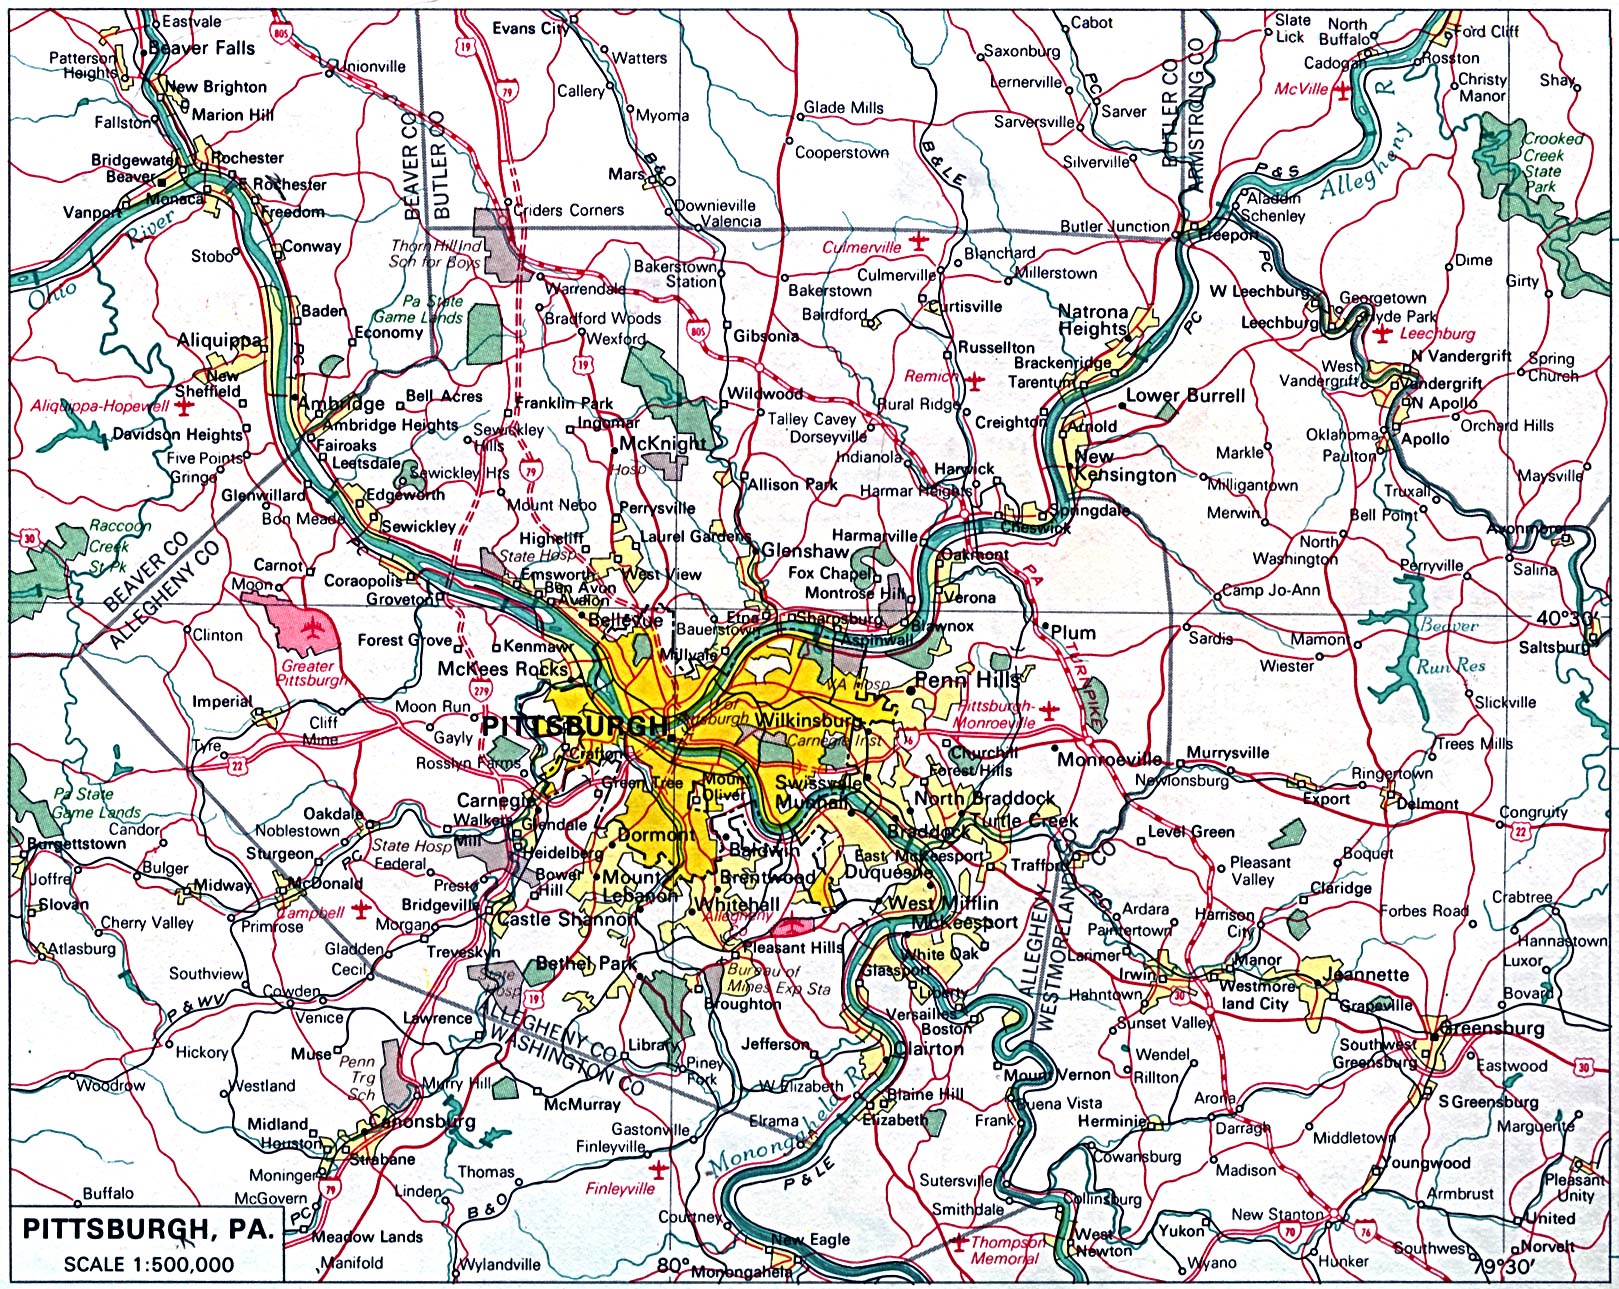  Maps of U.S. Metropolitan Areas. Pittsburgh, Pennsylvania 1970 (747K) 